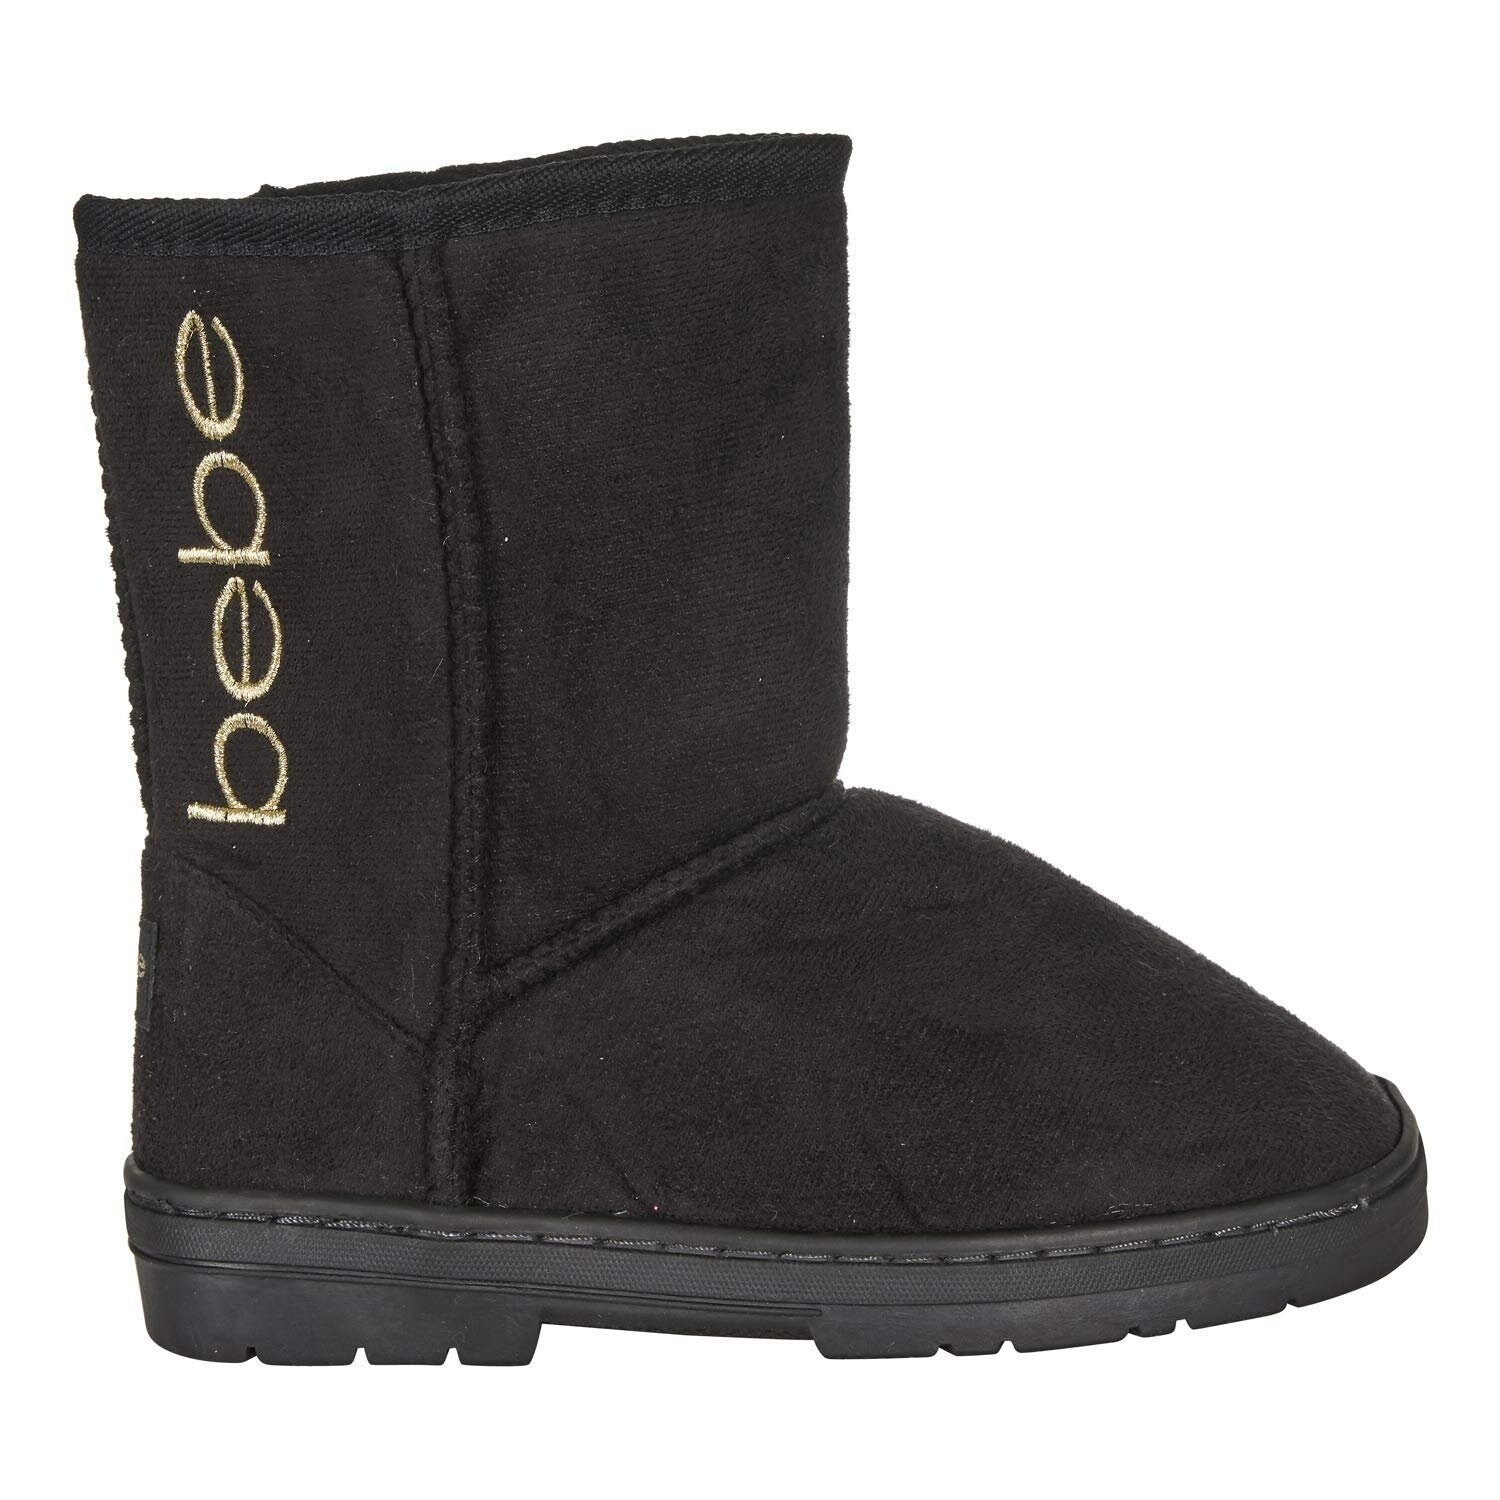 bebe snow boots